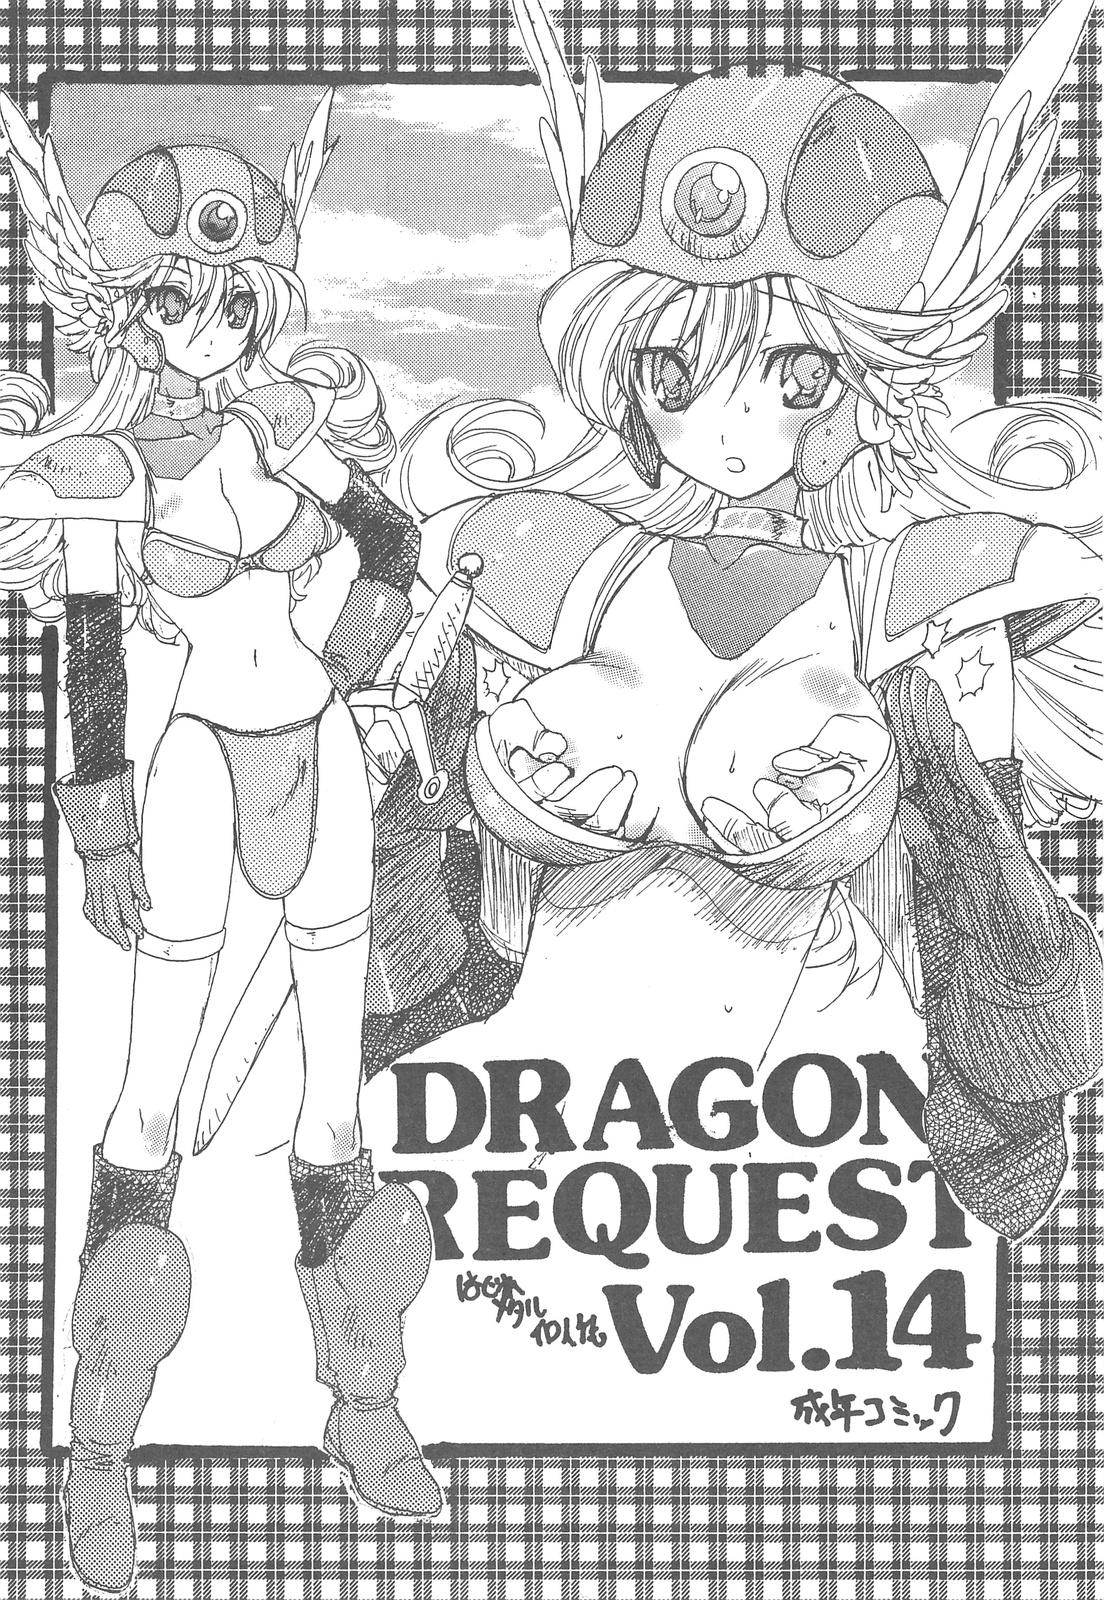 Funny DRAGON REQUEST Vol.14 - Dragon quest iii Lesbian - Page 2